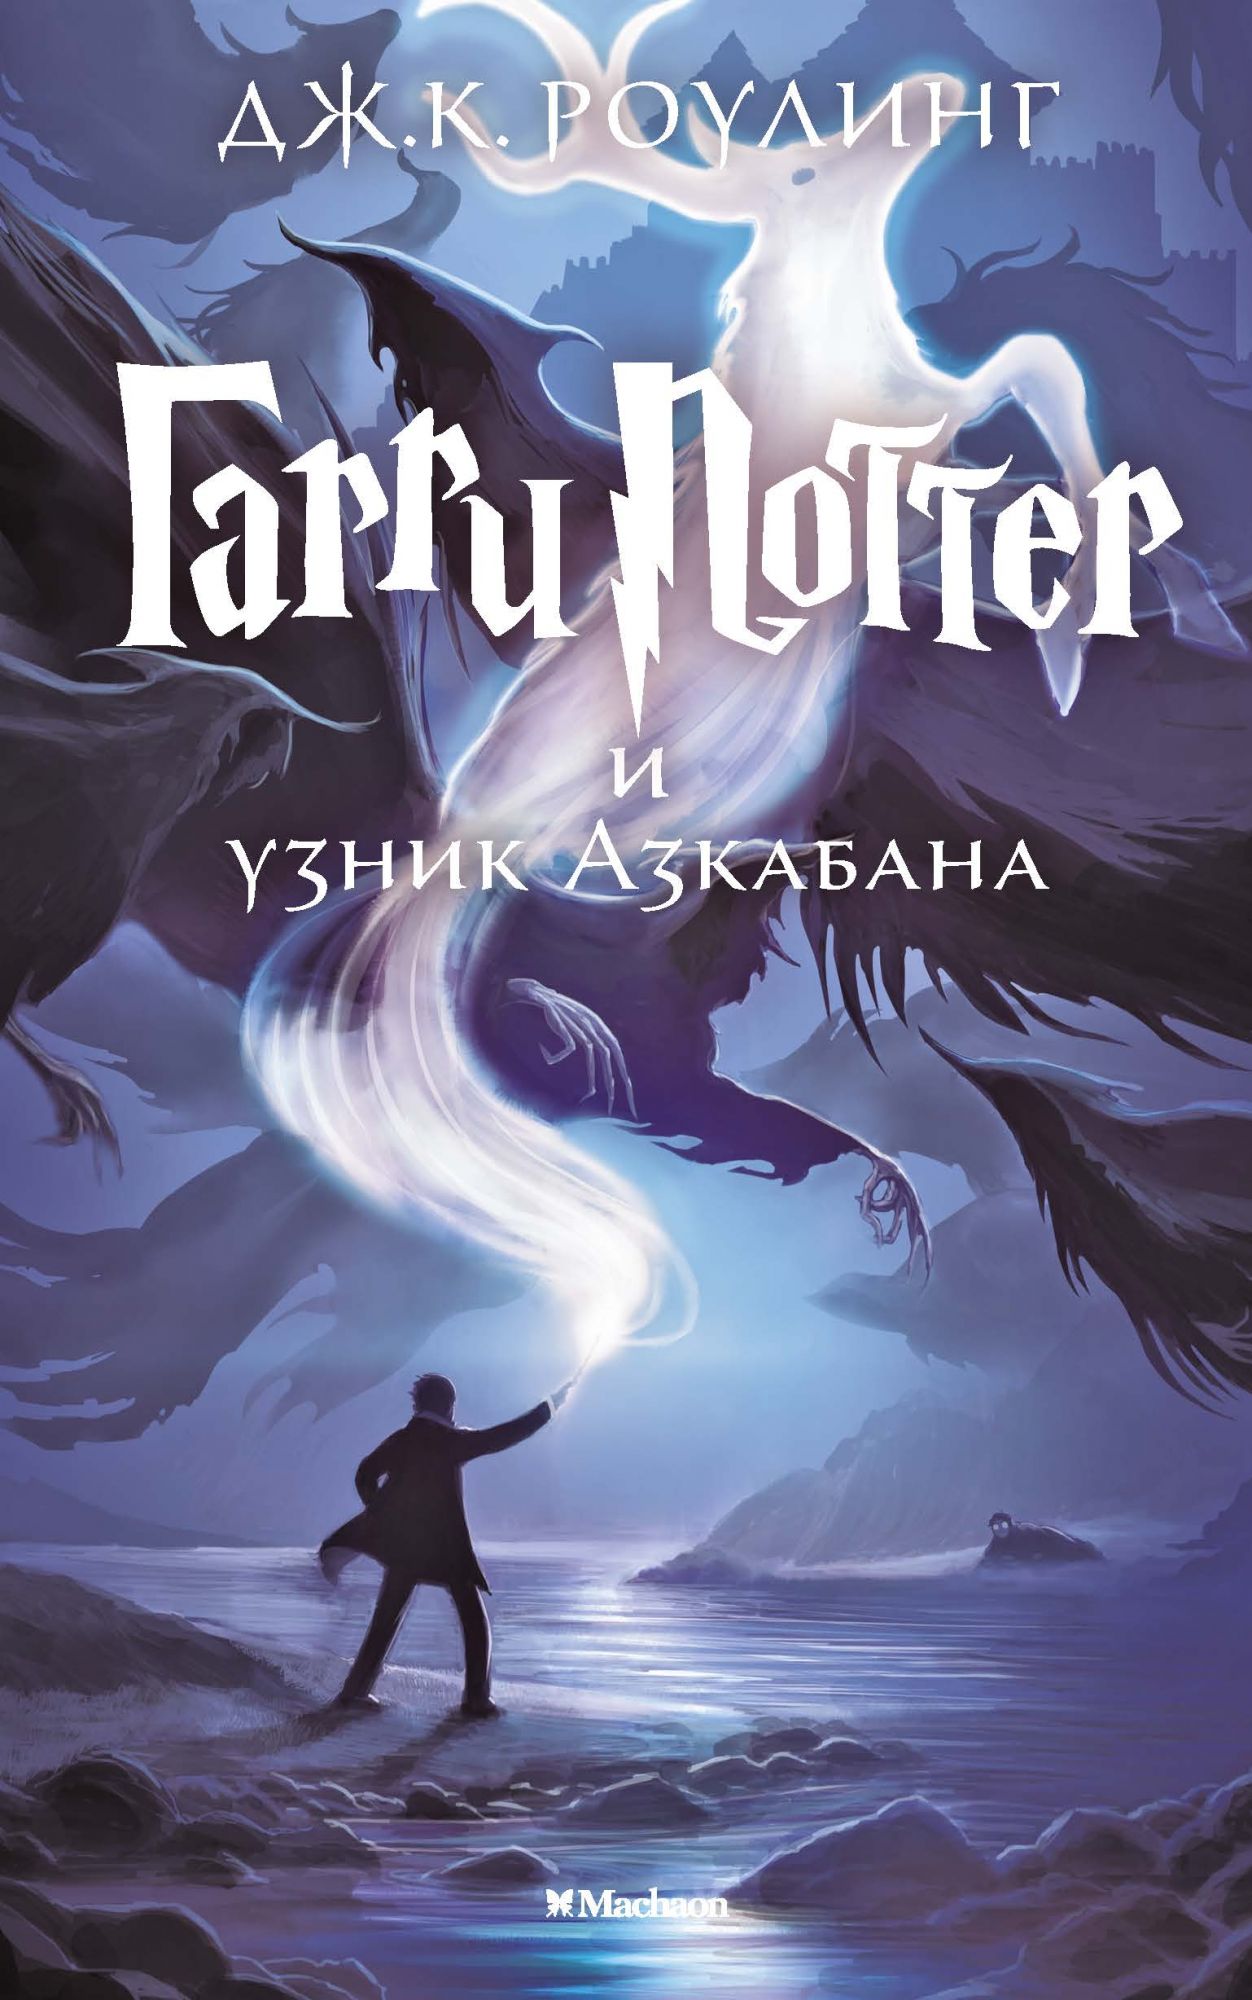 Book “Гарри Поттер и узник Азкабана” by Дж.К. Роулинг